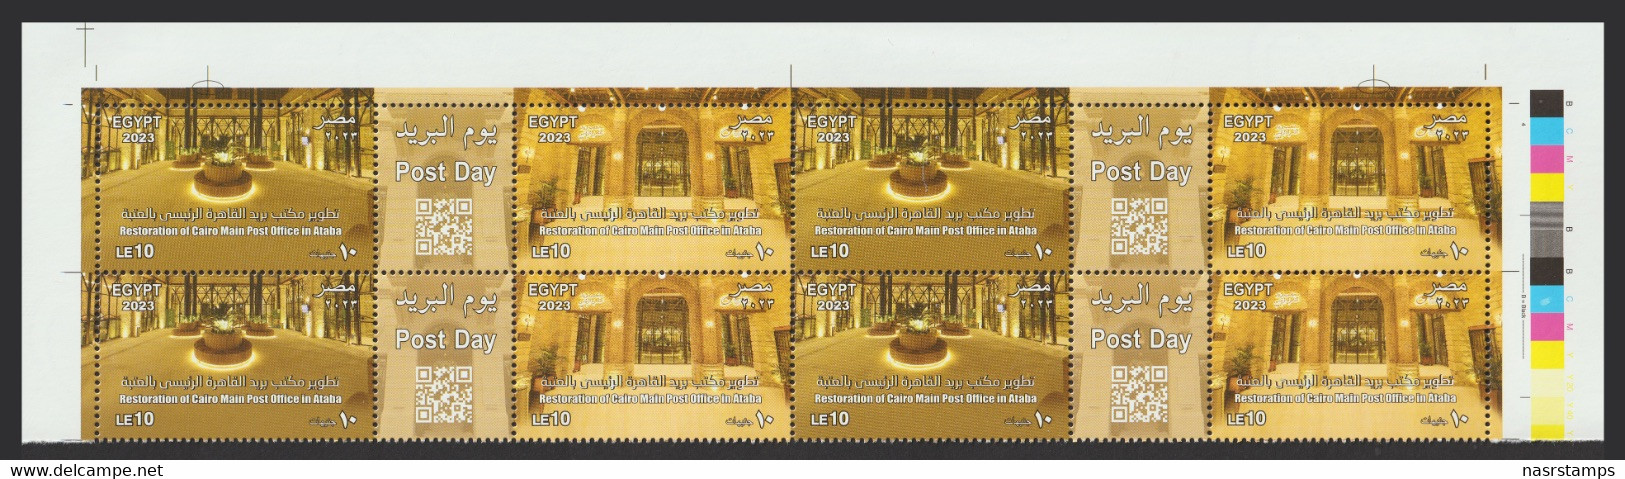 Egypt - 2023 - Block Of 4 - ( Post Day - Restoration Of Cairo Main Post Office In Ataba ) - Nuovi